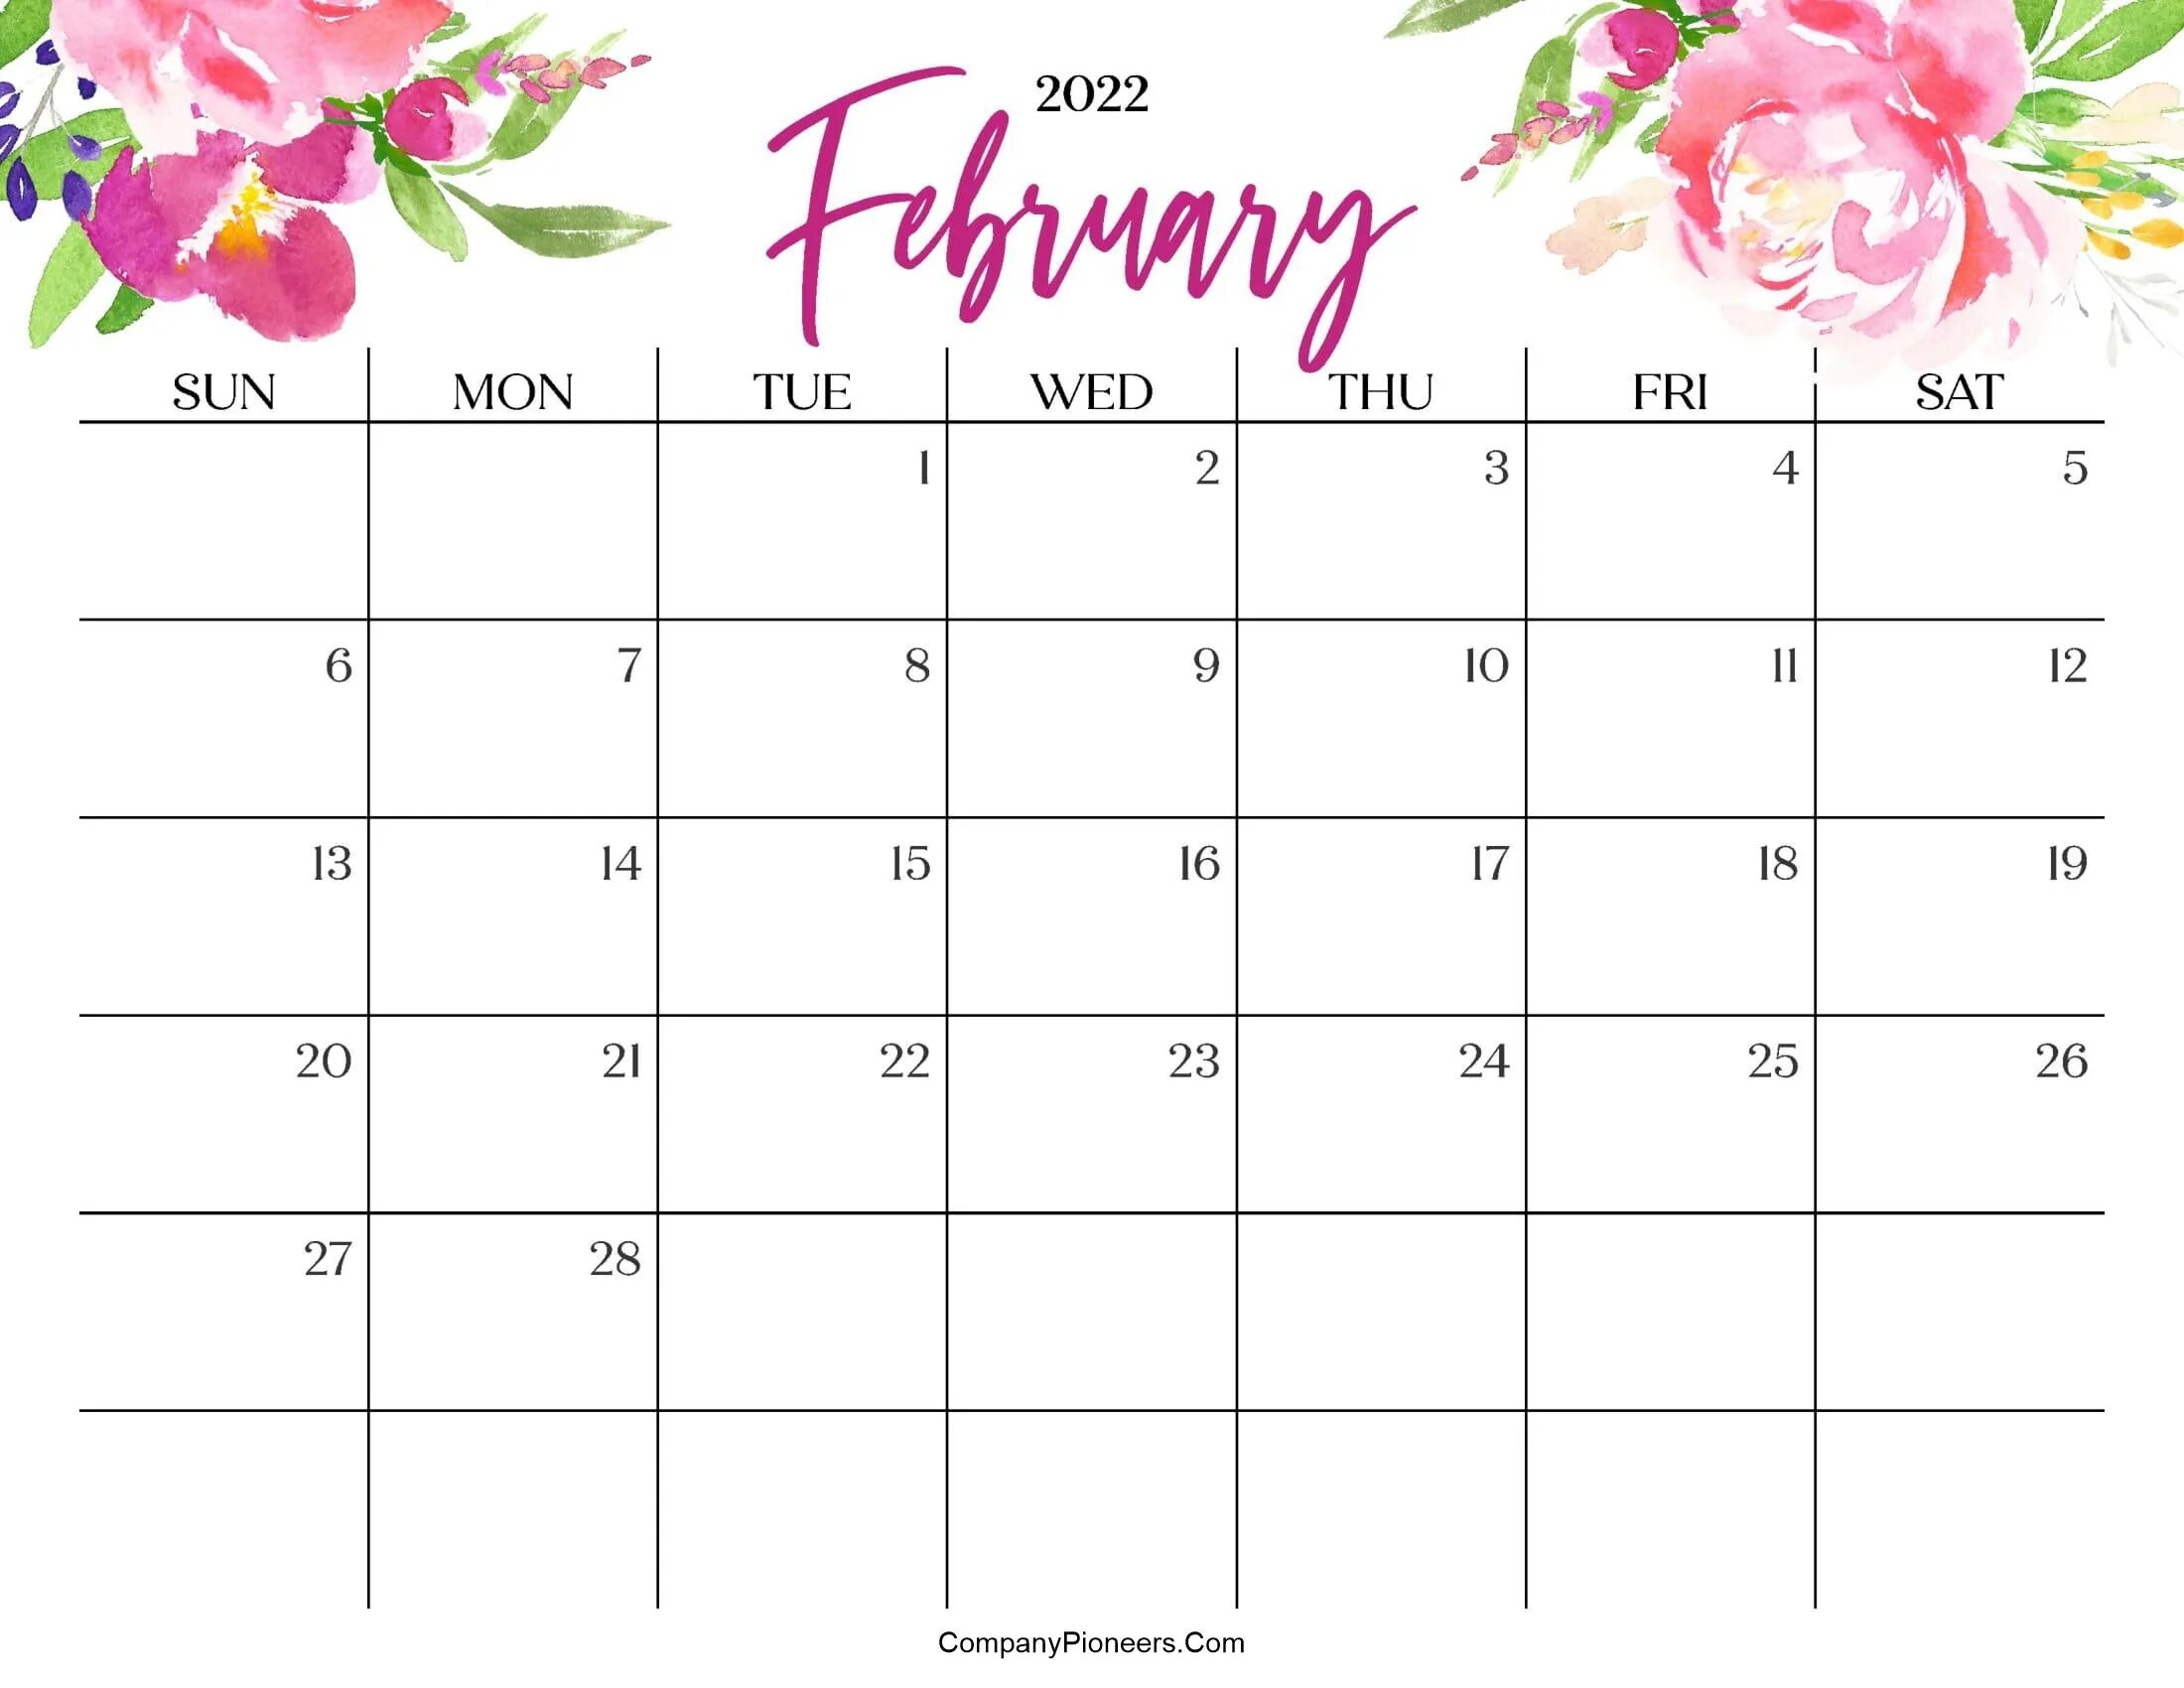 February 2022. Календарь декабрь 2022 красивый. February календарь. February календарь красивый. Закончится февраль 2022